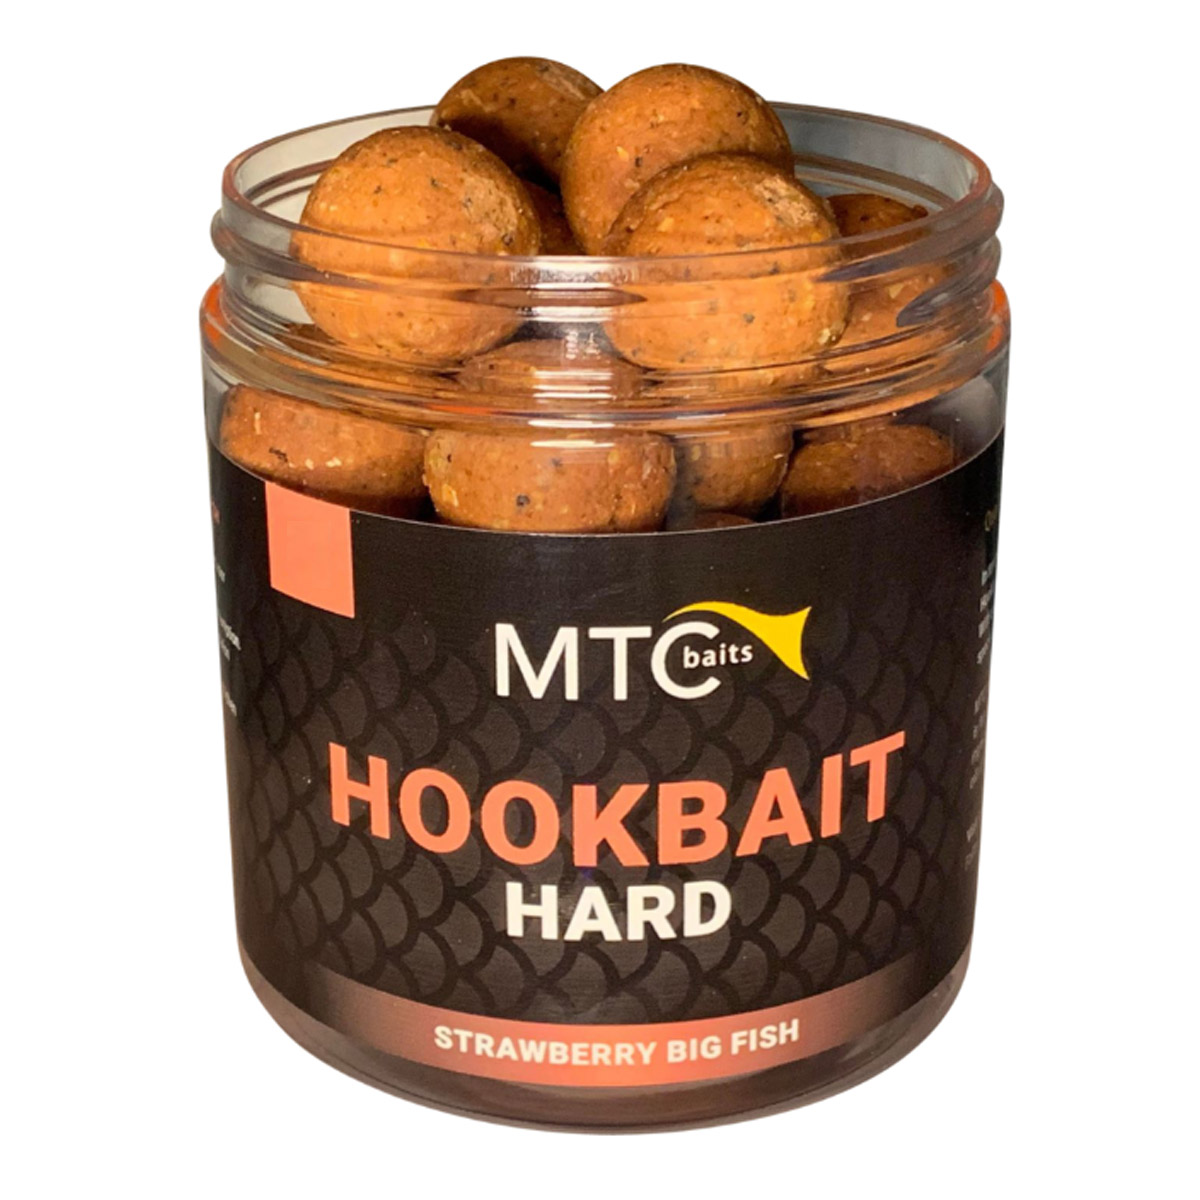 MTC Baits Hookbait Hard Strawberry Big Fish 16 MM